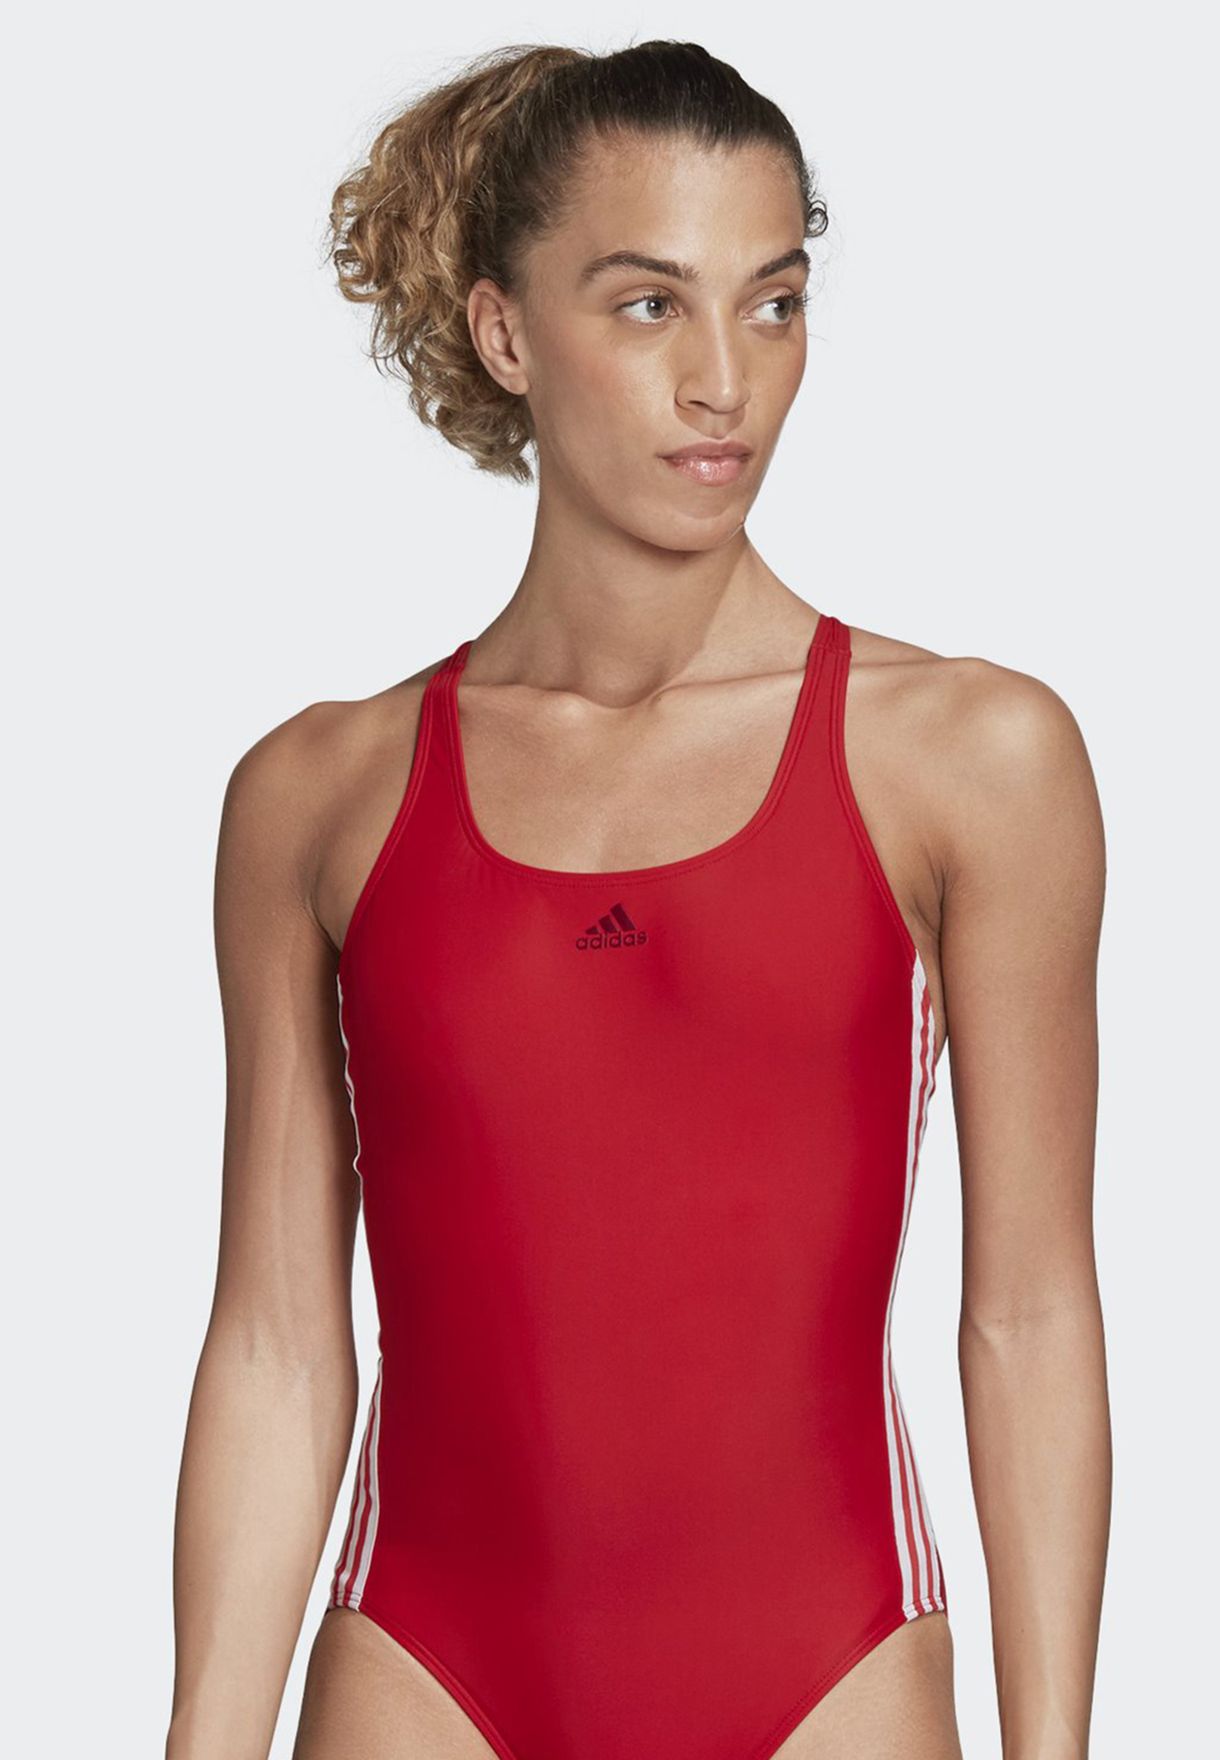 red adidas swimming costume